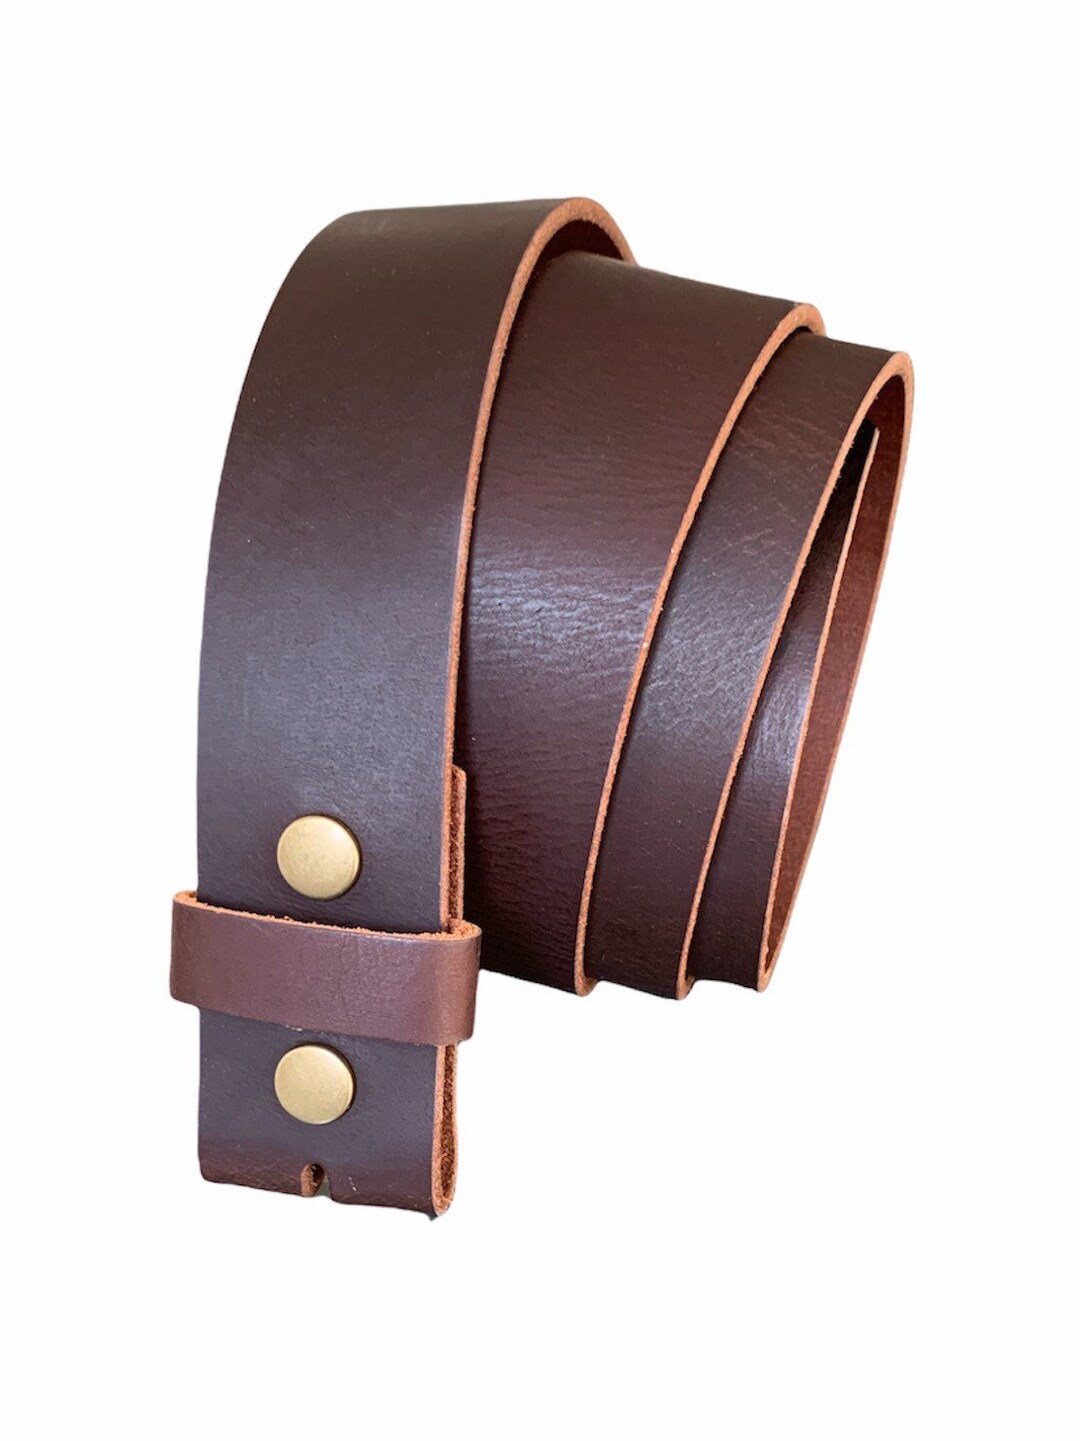 Brown Full Grain Leather Belt Interchangeable Snap Belt 11/2 - Etsy